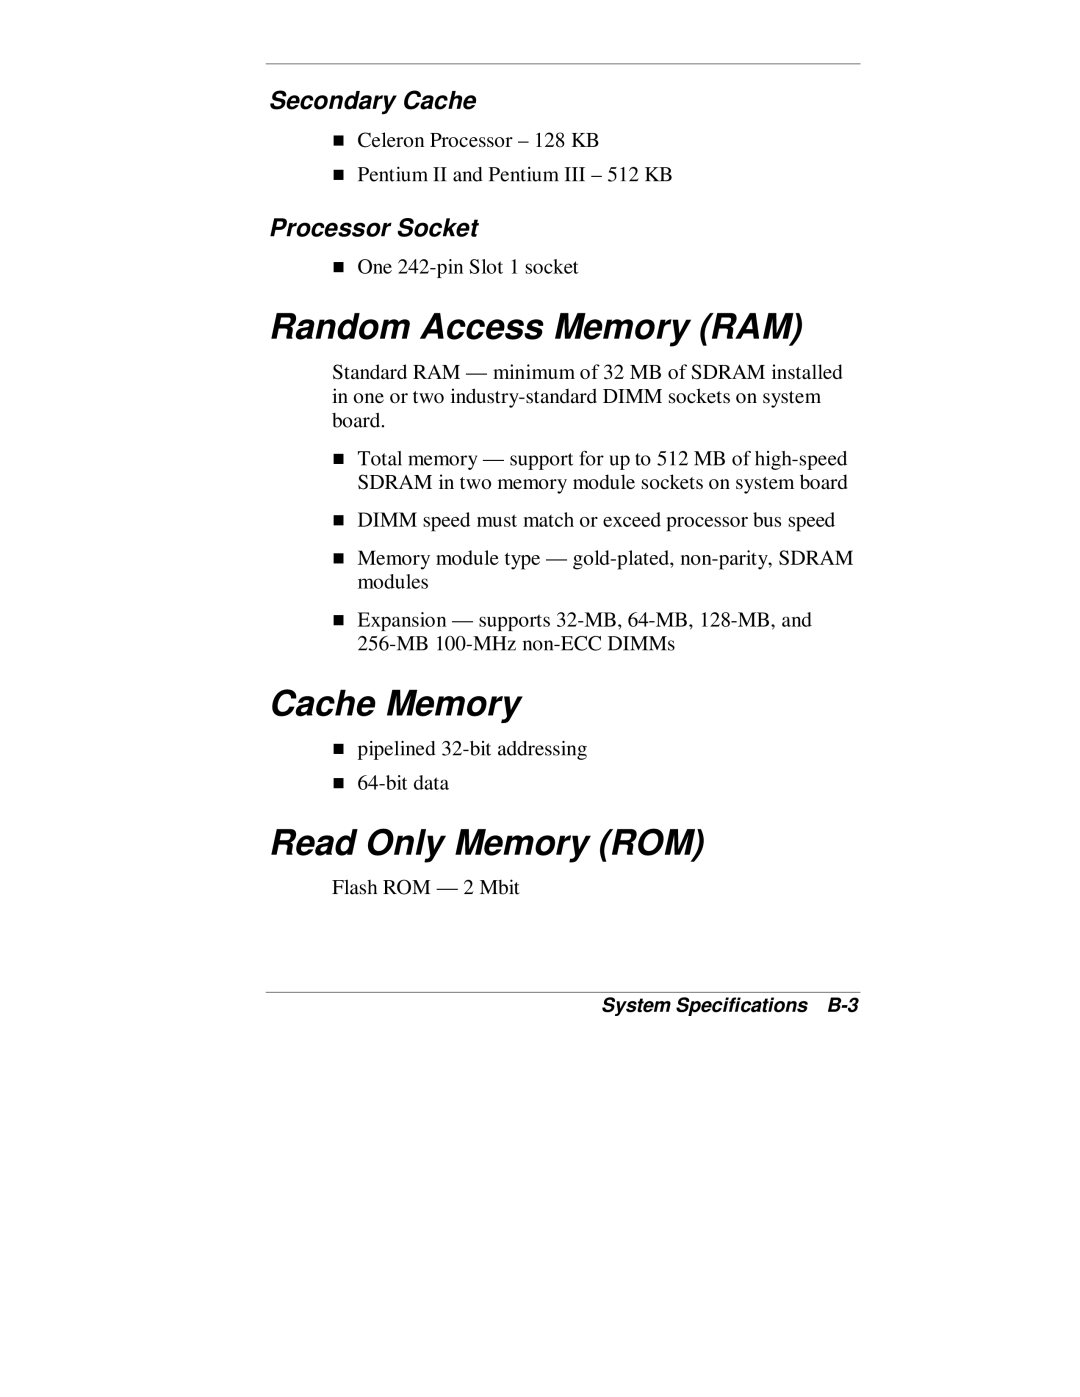 NEC VT 300 Series manual Random Access Memory RAM, Cache Memory, Read Only Memory ROM, Secondary Cache, ProcessorTSocket 